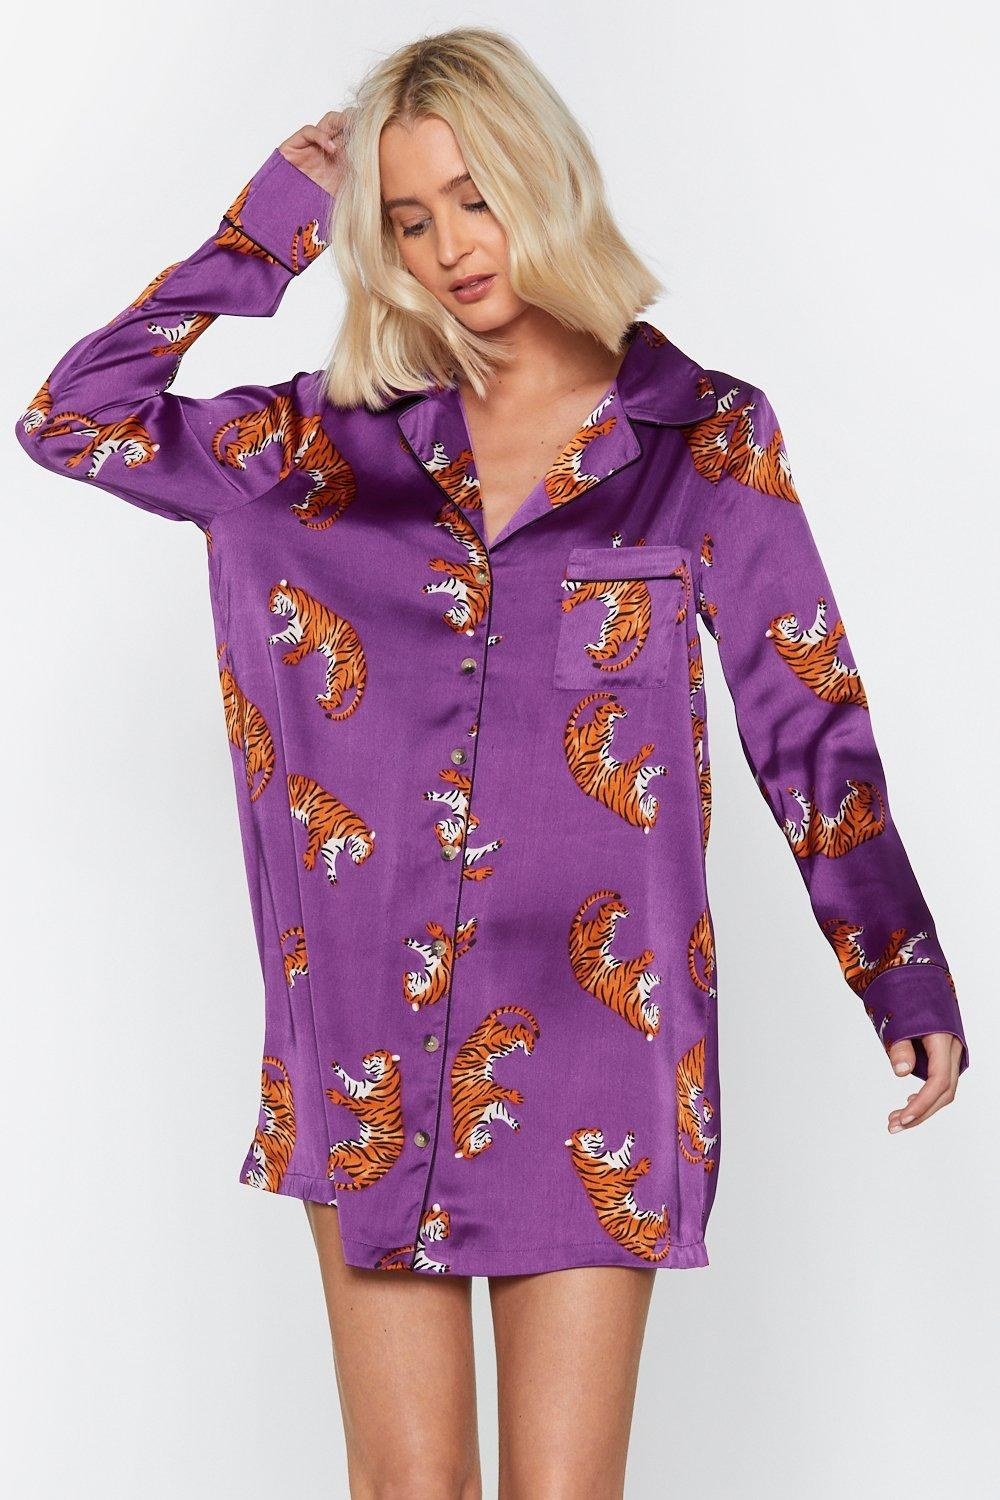 model wearing purple satin shirt with leopard print